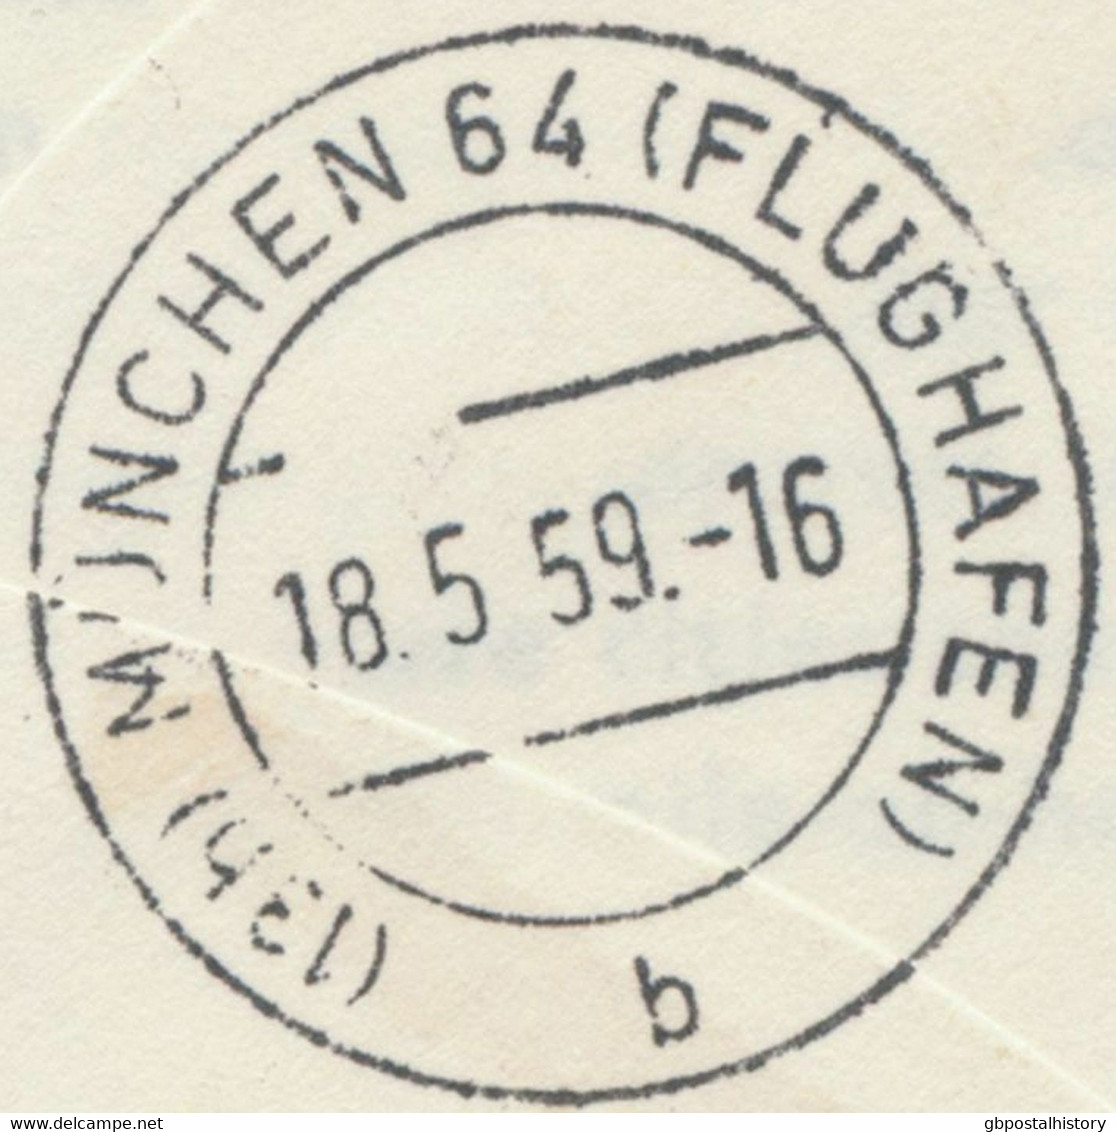 SWEDEN 1959, First Flight SAS First Caravelle Jet Flight "STOCKHOLM - MUNICH" - Lettres & Documents